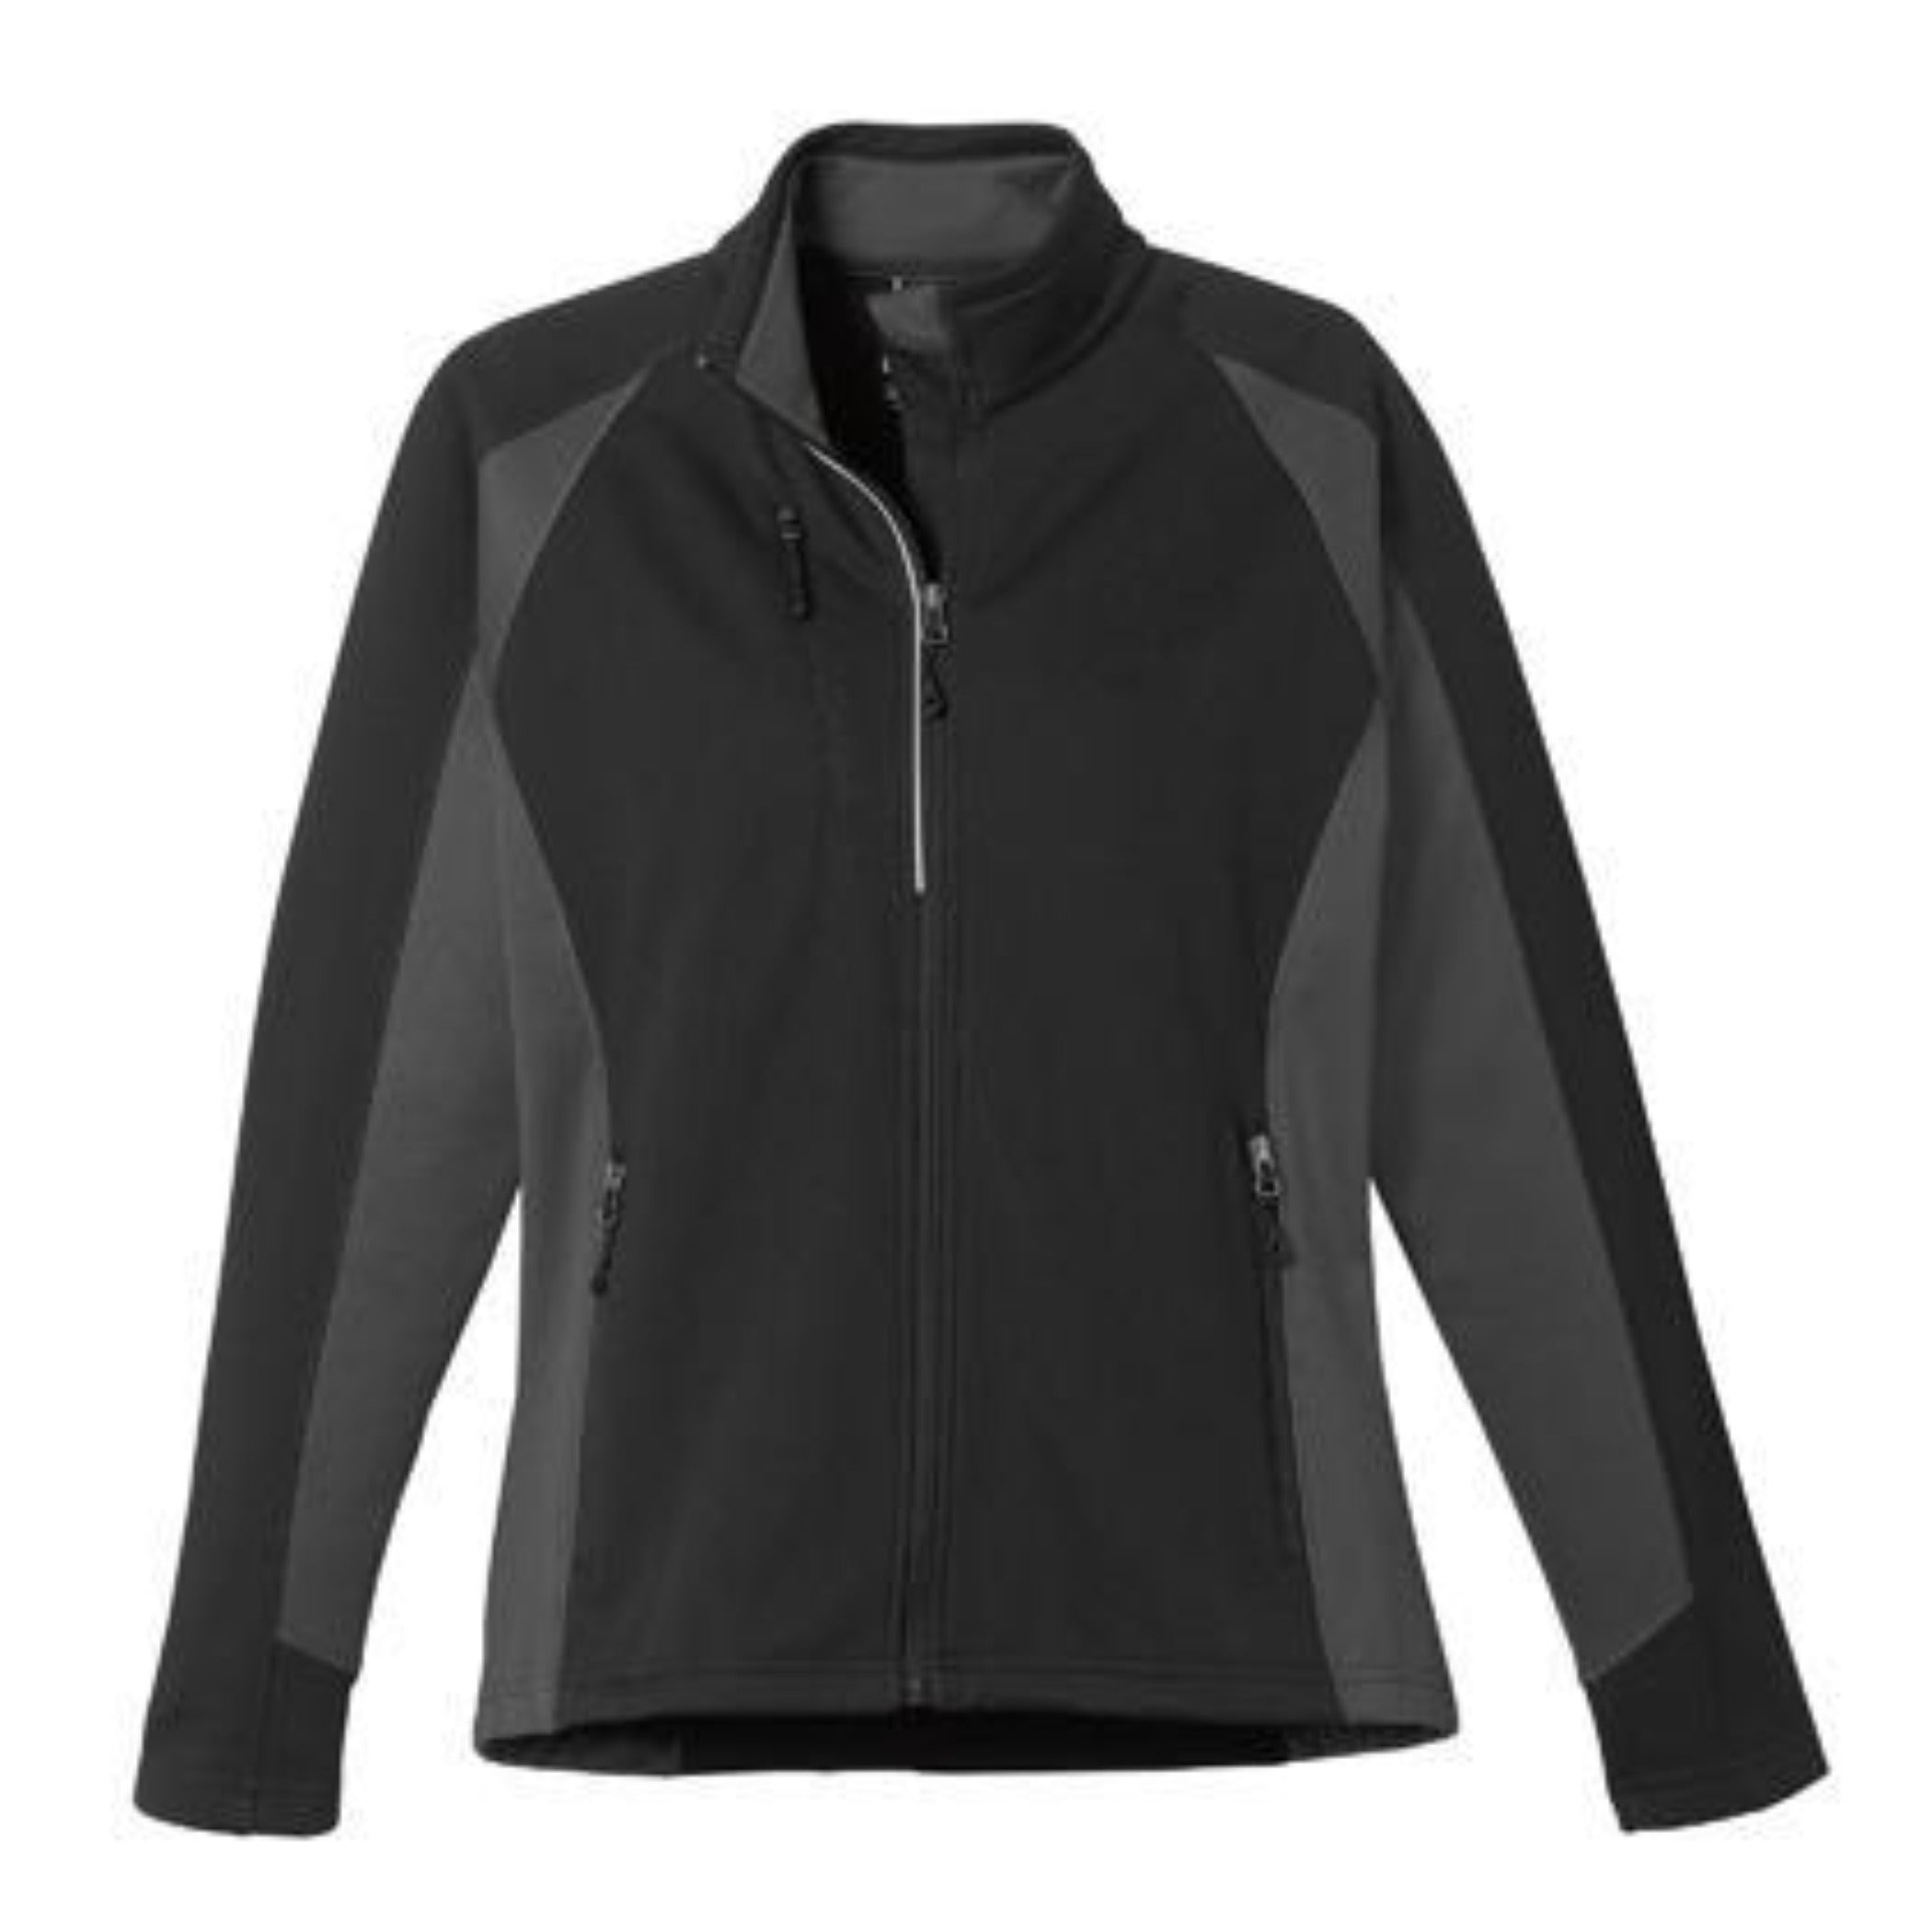 2 tone black grey jacket